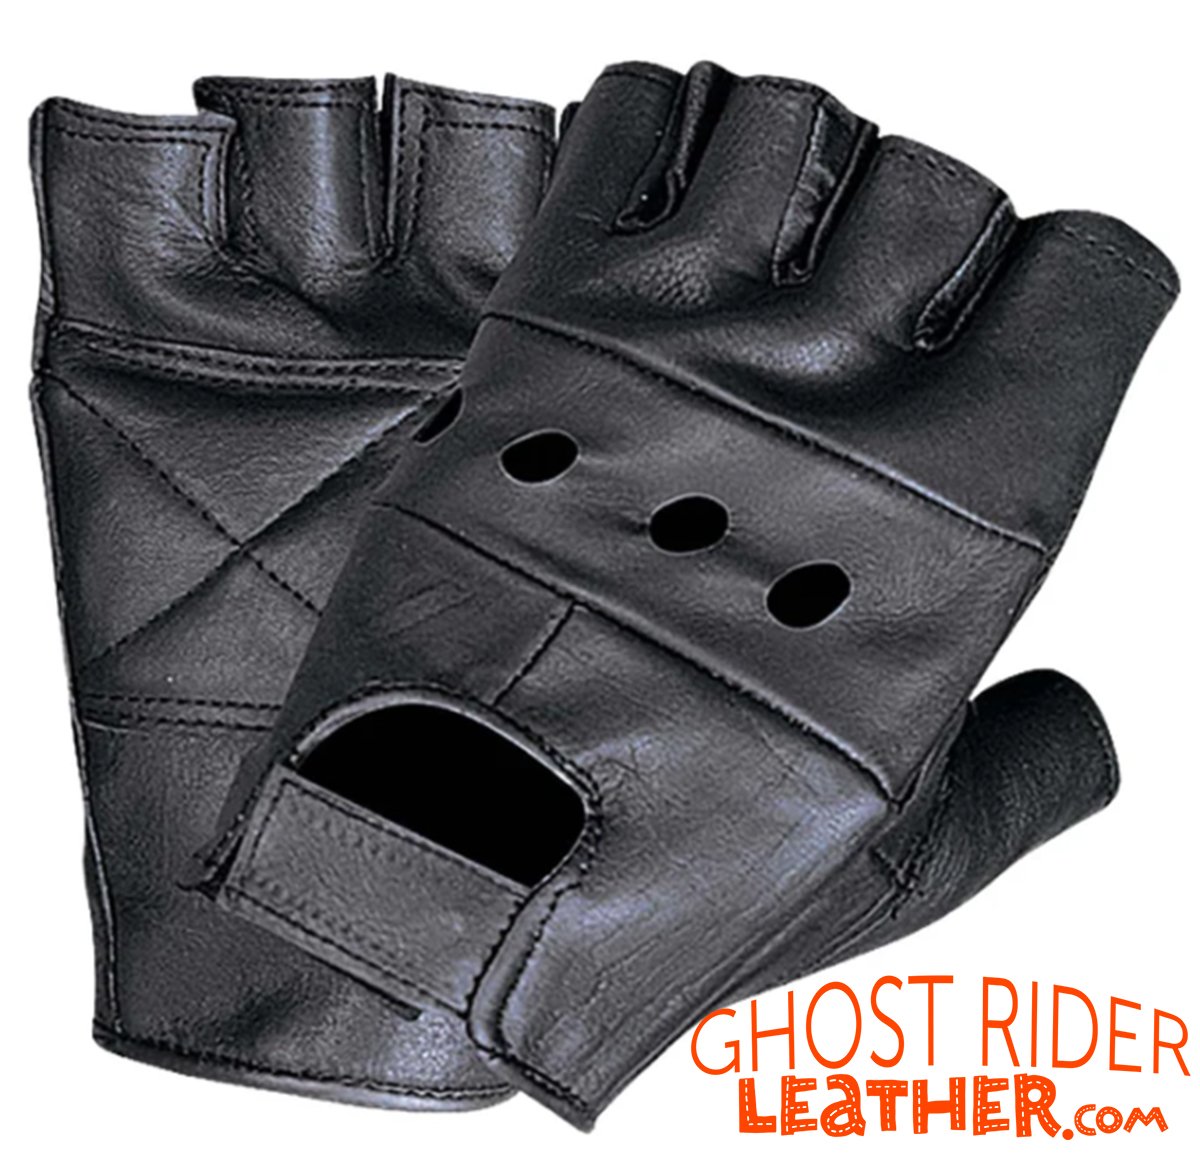 Leather Gloves - Men's - Fingerless Gloves - Motorcycle - 1200-AO-UN